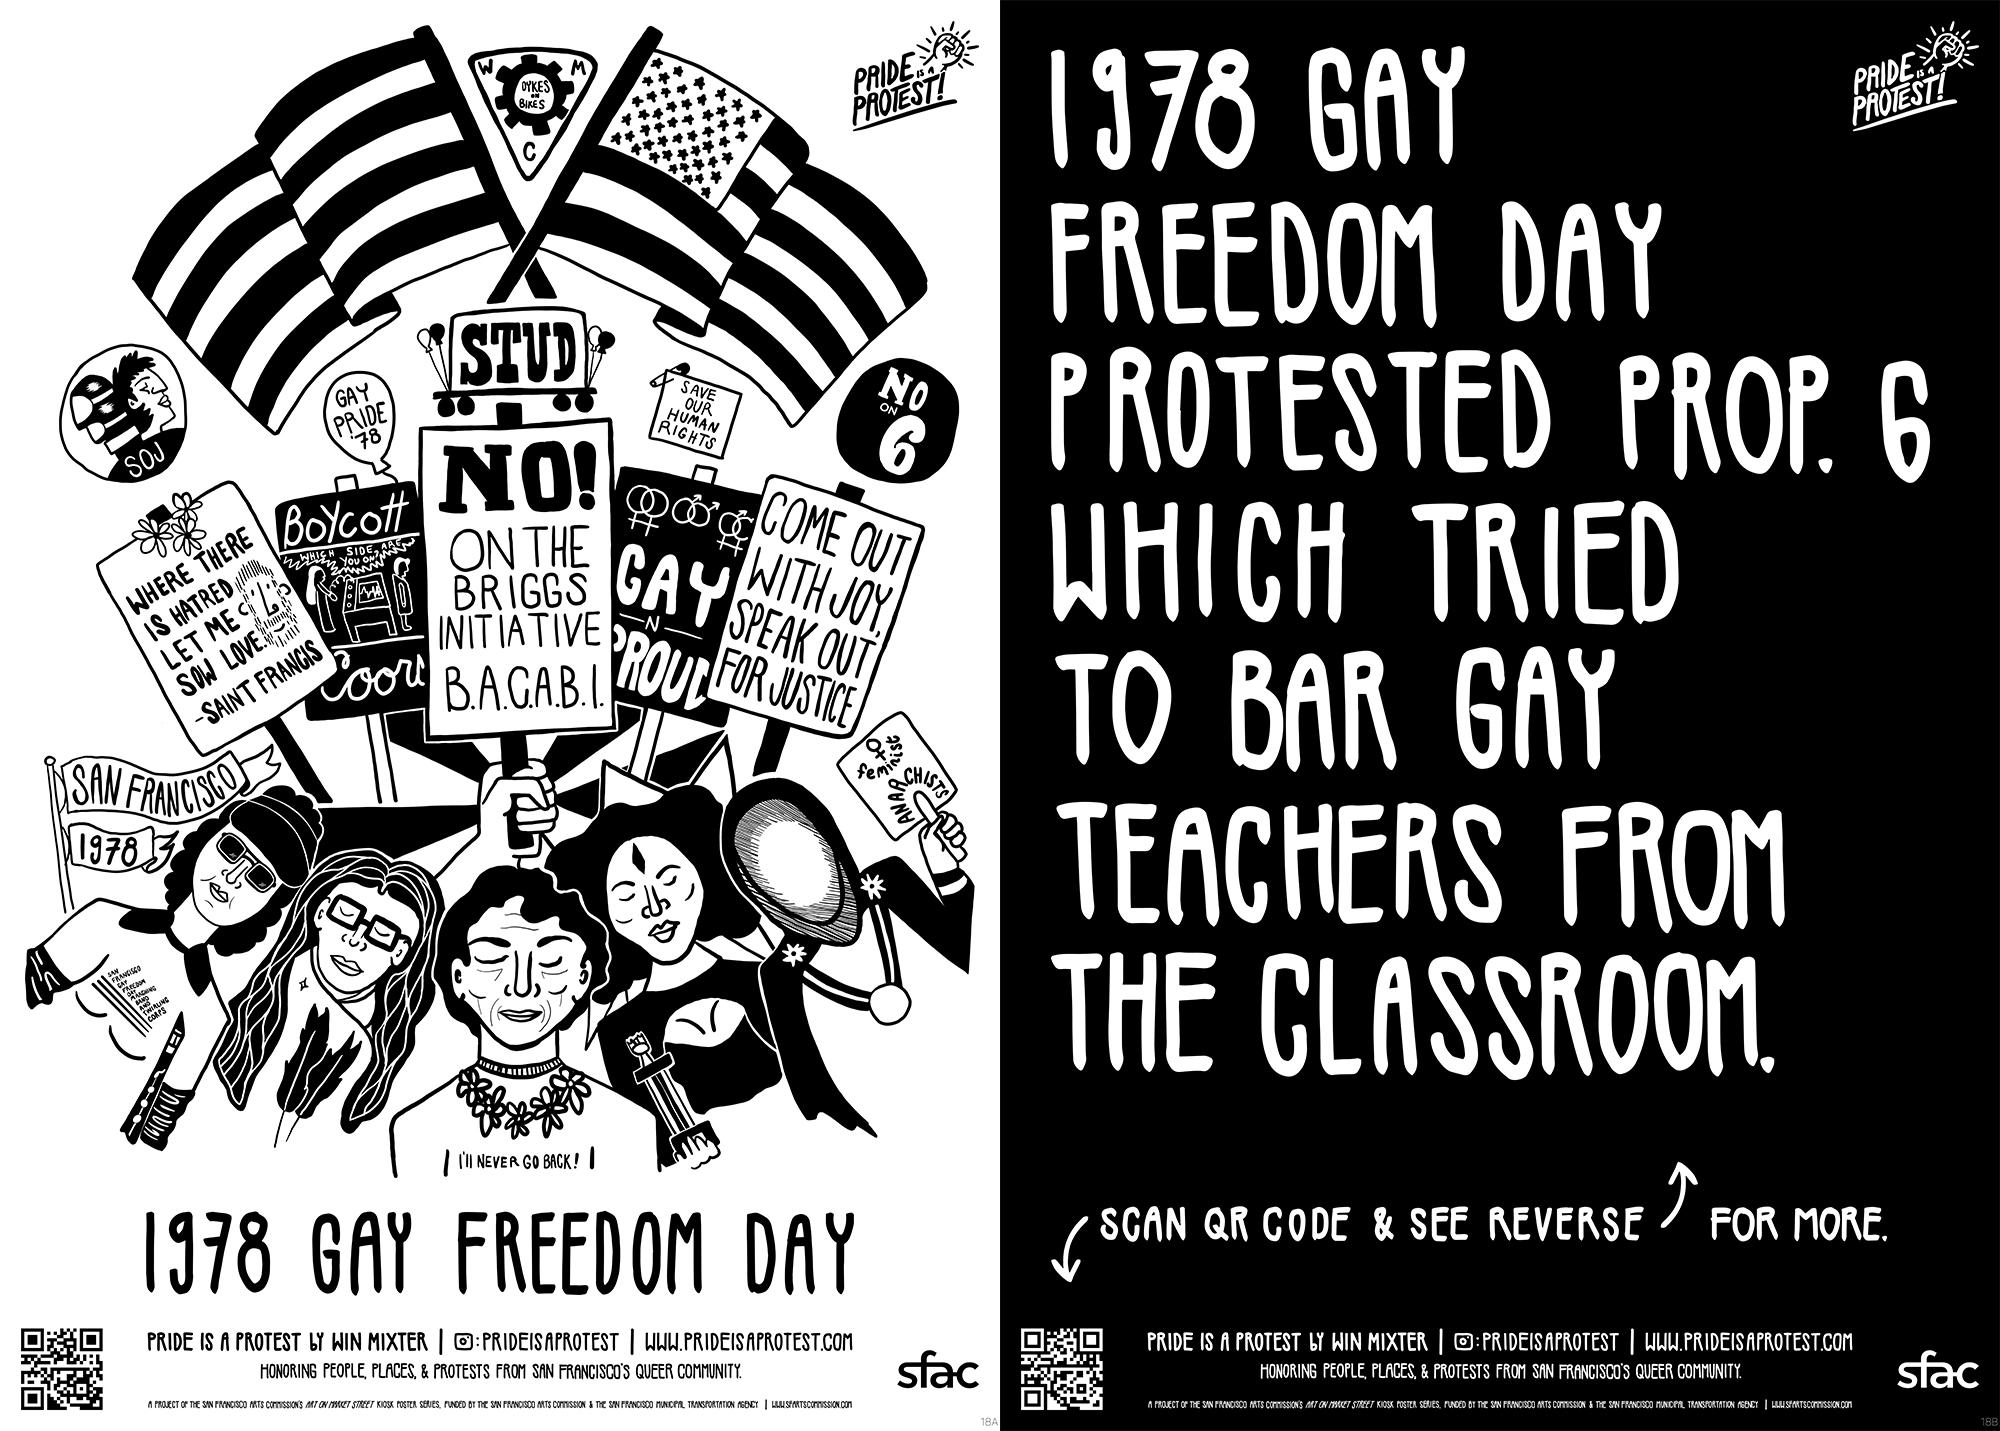 Black and White Art poster design in muni bus kiosk. 1978 Gay Freedom Day Parade